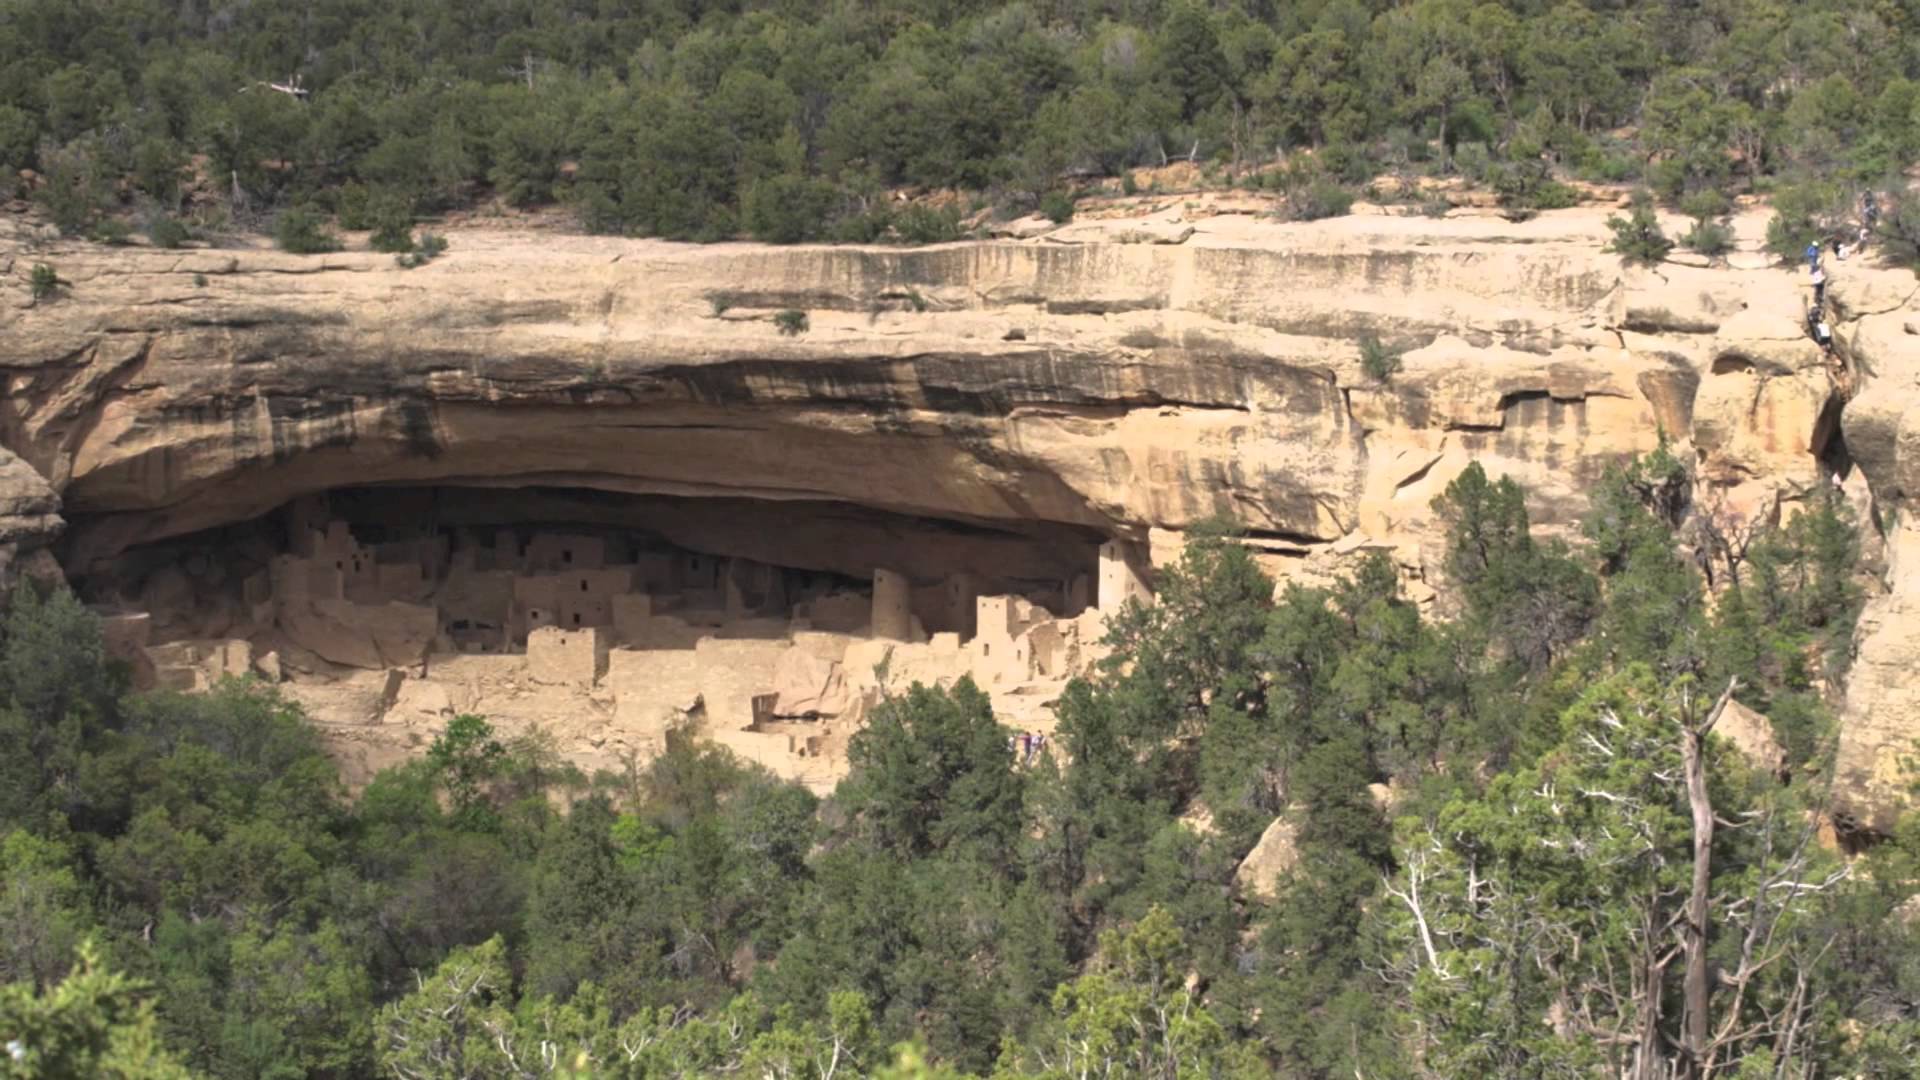 The Colorado Cliff Dwellings of Mesa Verde